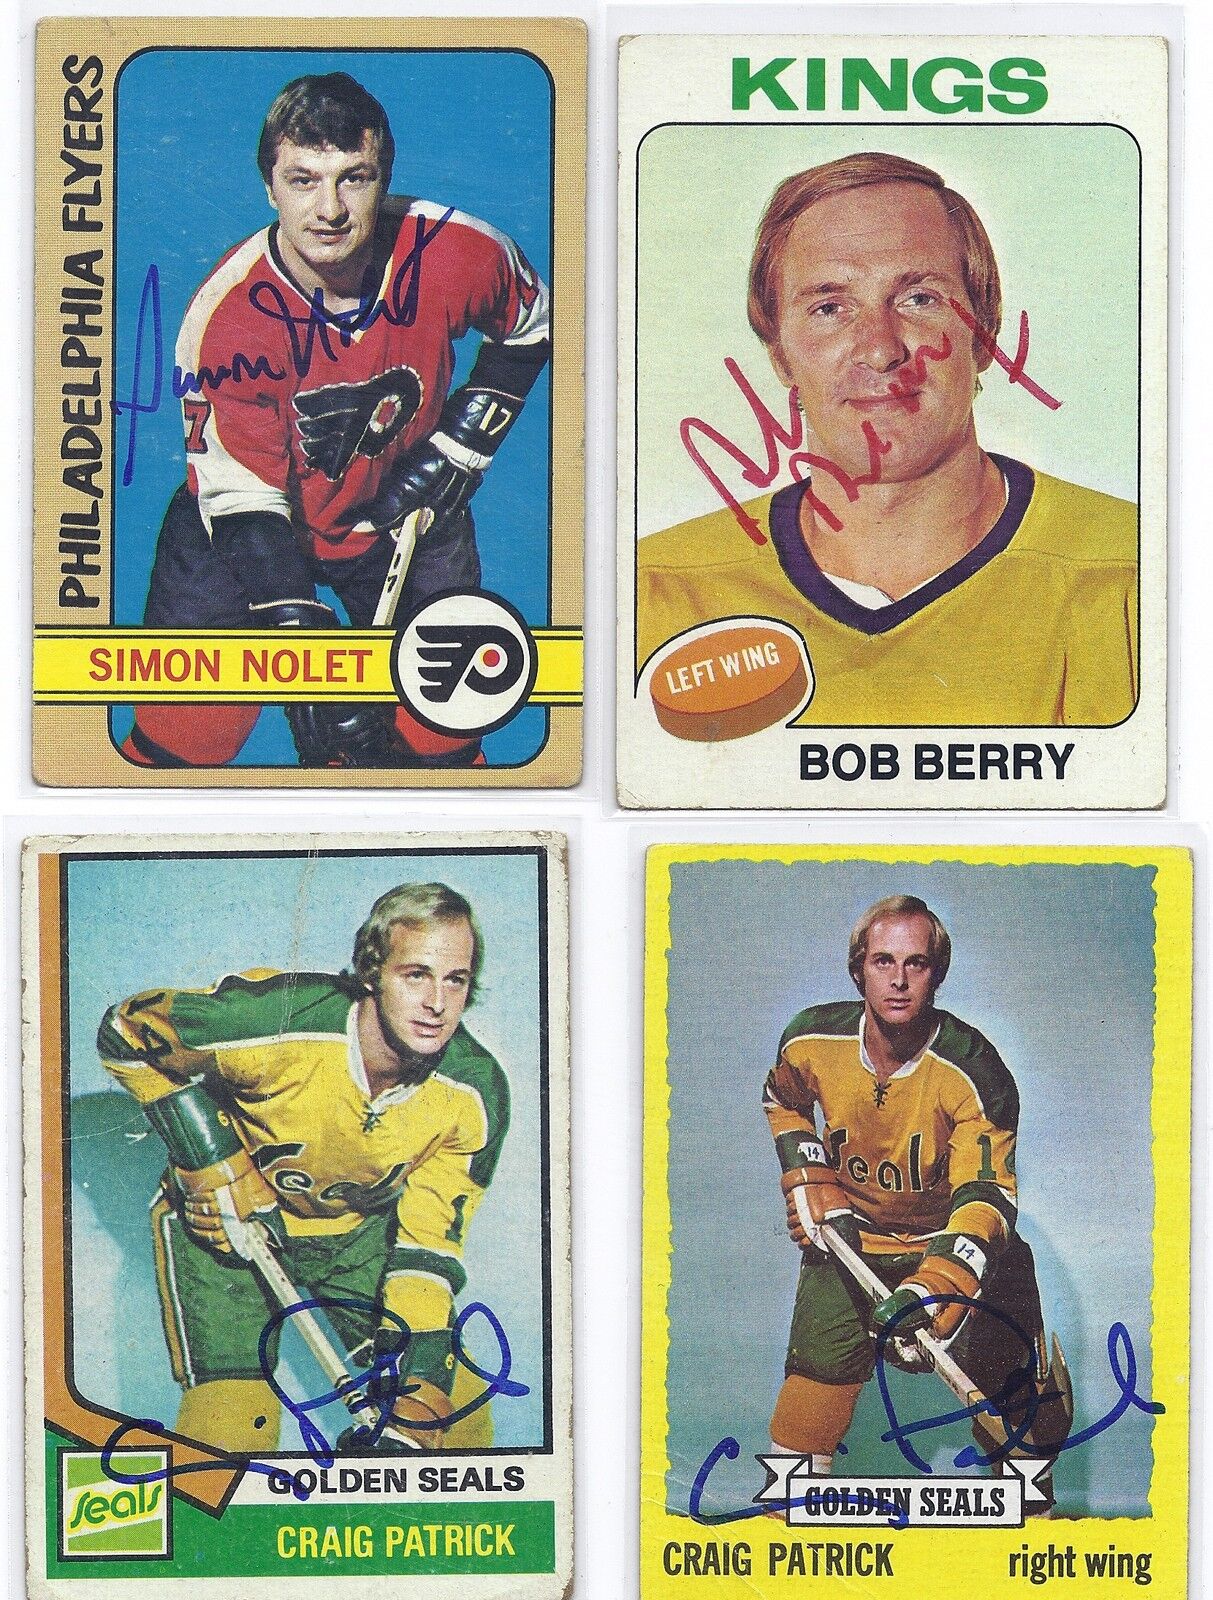 1974-75 Topps 262 Craig Patrick California Golden Seals Autographed Hockey Card 